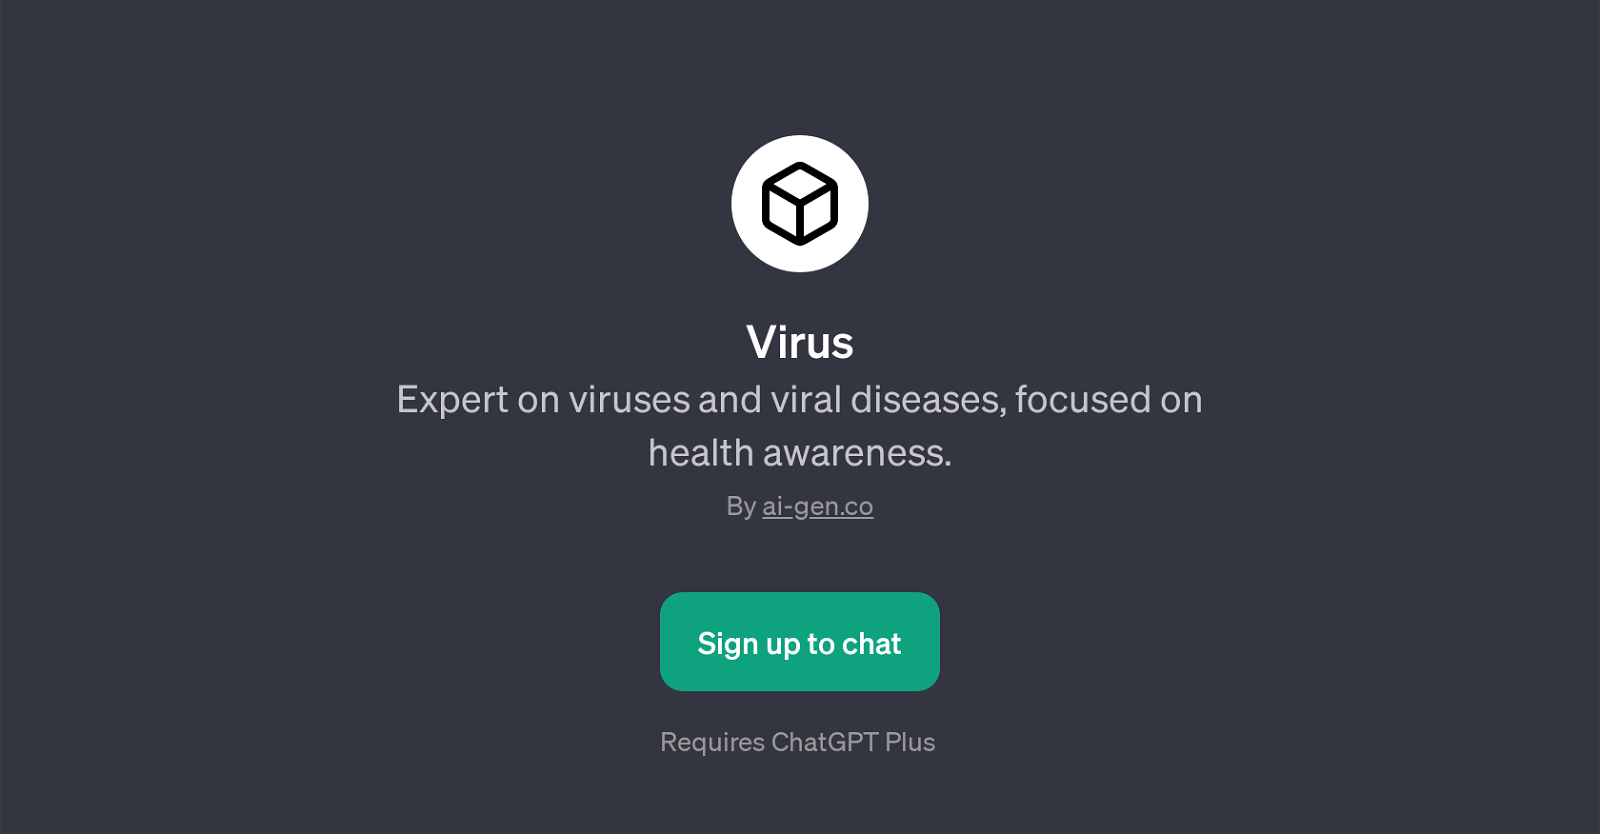 VirusPage website